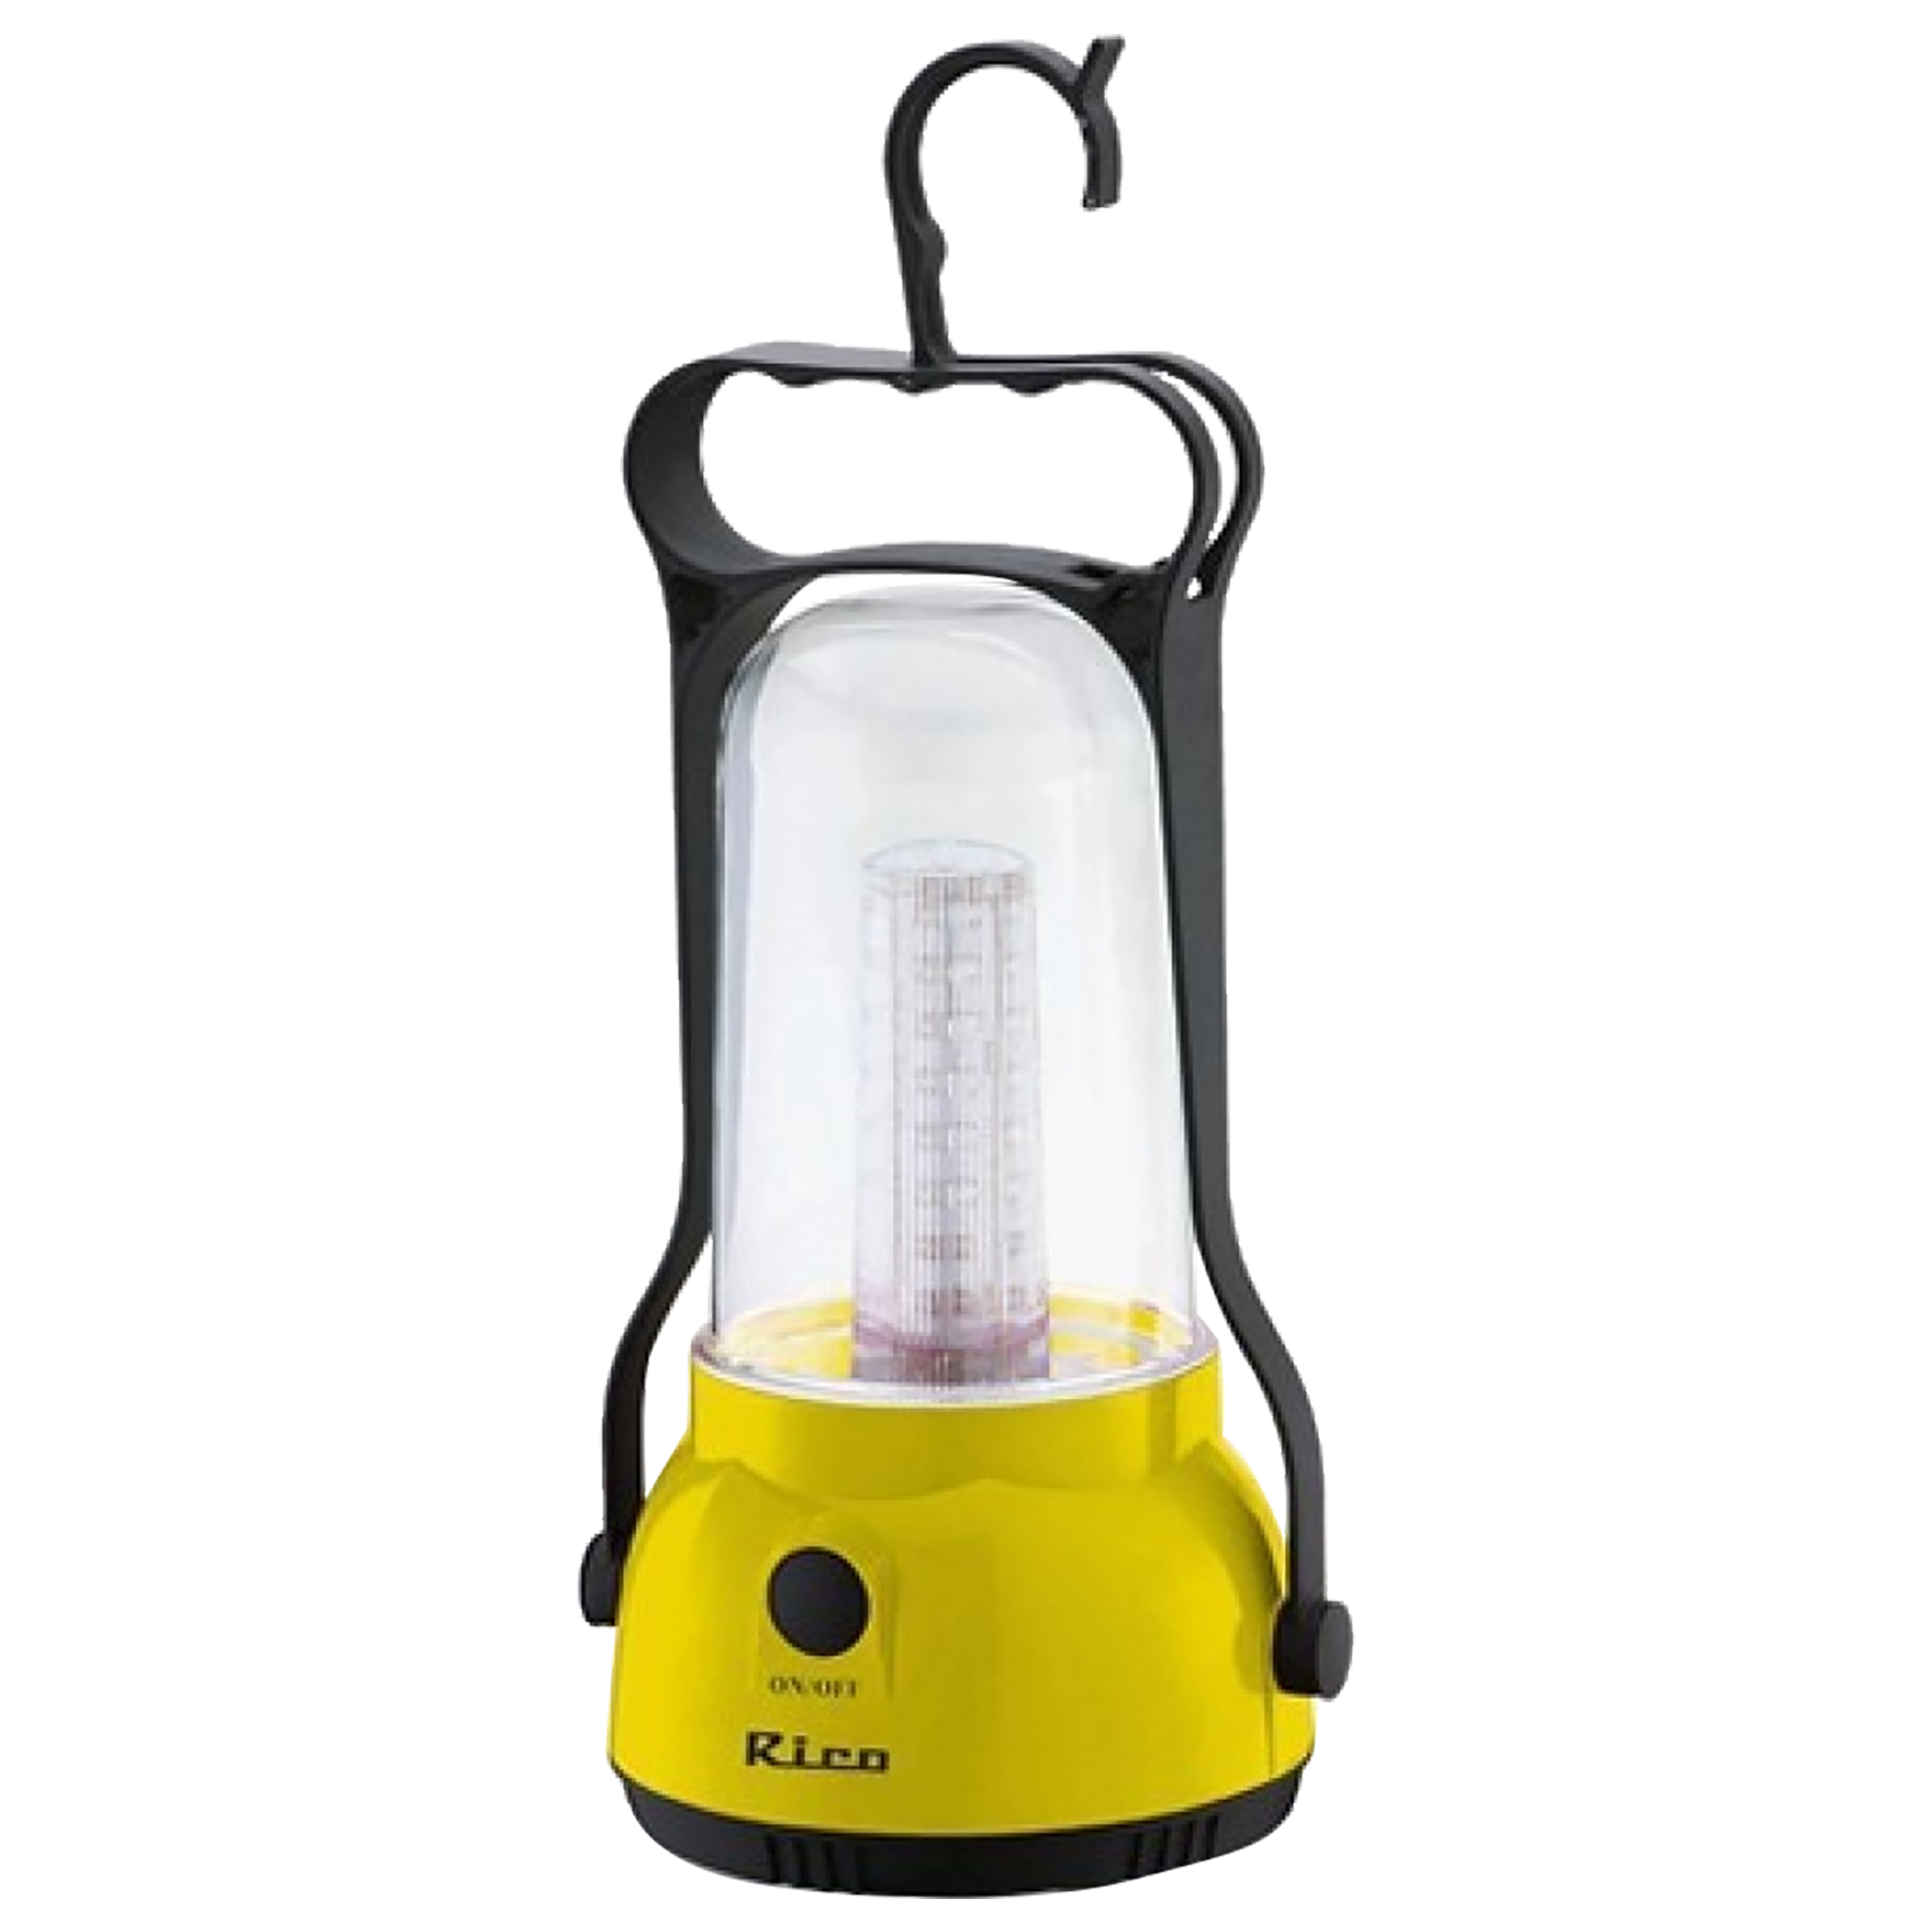 Rico - Rico 5 Watts Lantern (Rechargeable LED Lantern, EL1506, Yellow)